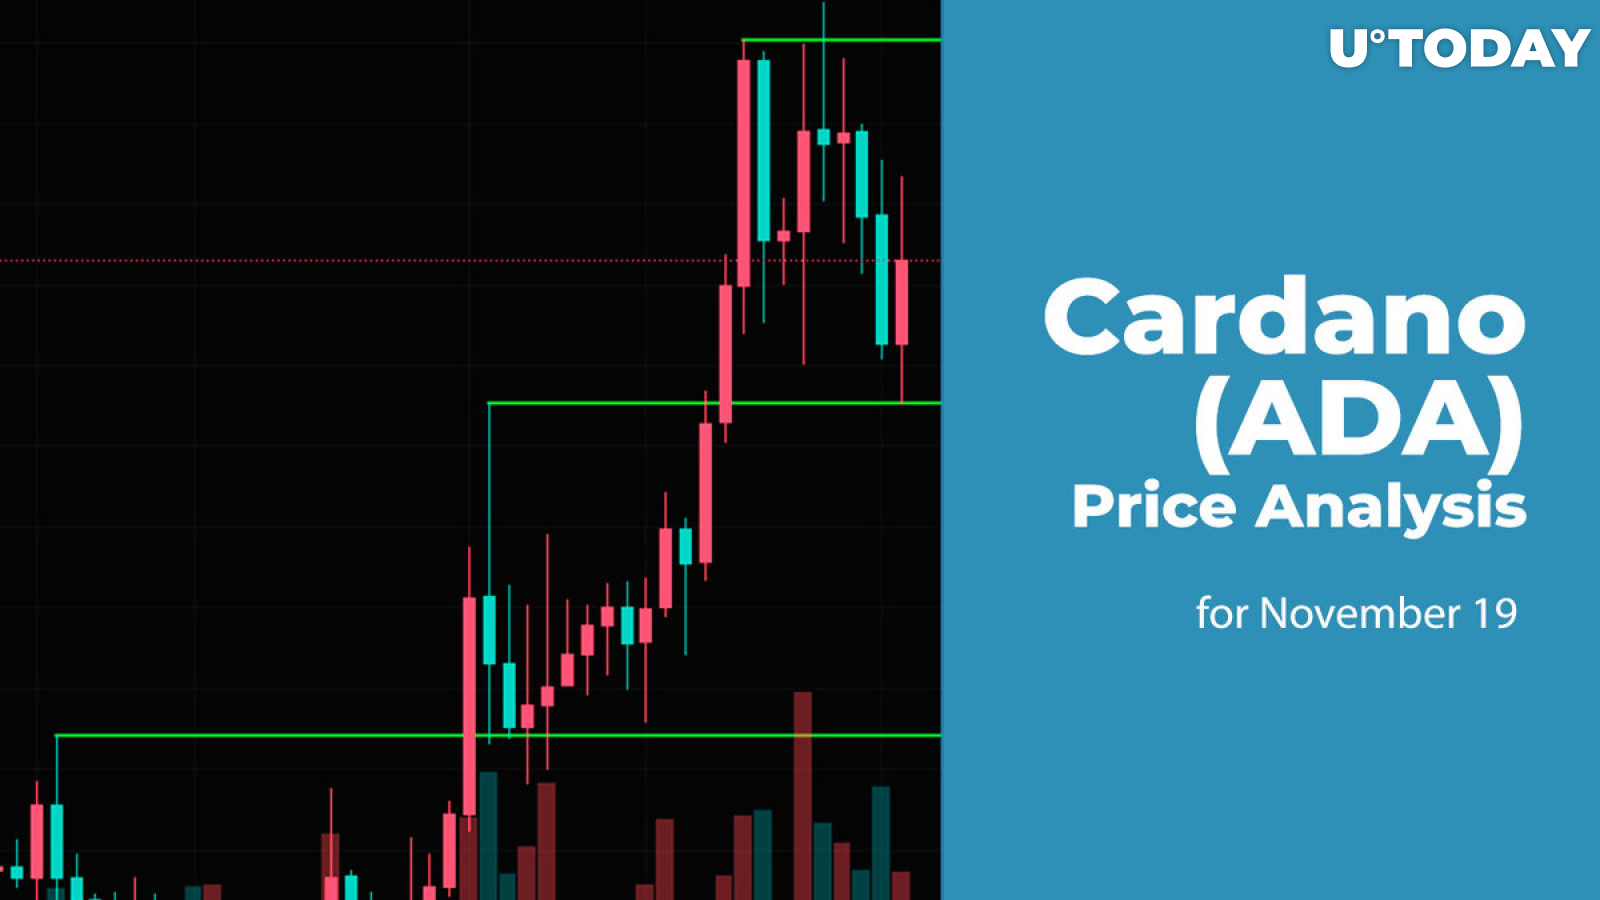 Cardano (ADA) Price Analysis for November 19